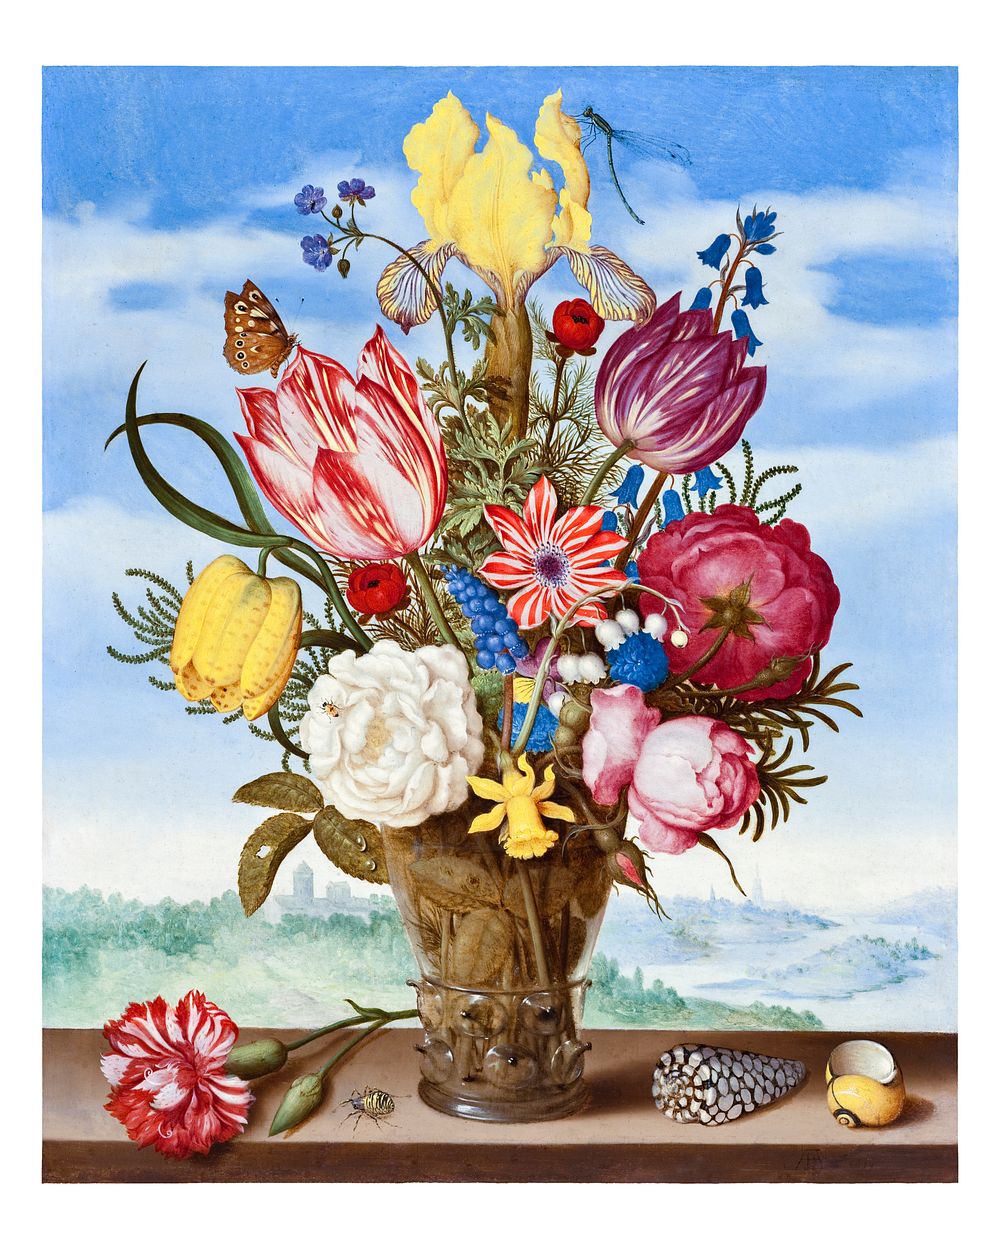 Flower bouquet still life painting, vintage wall decor, enhanced from the artwork of Ambrosius Bosschaert